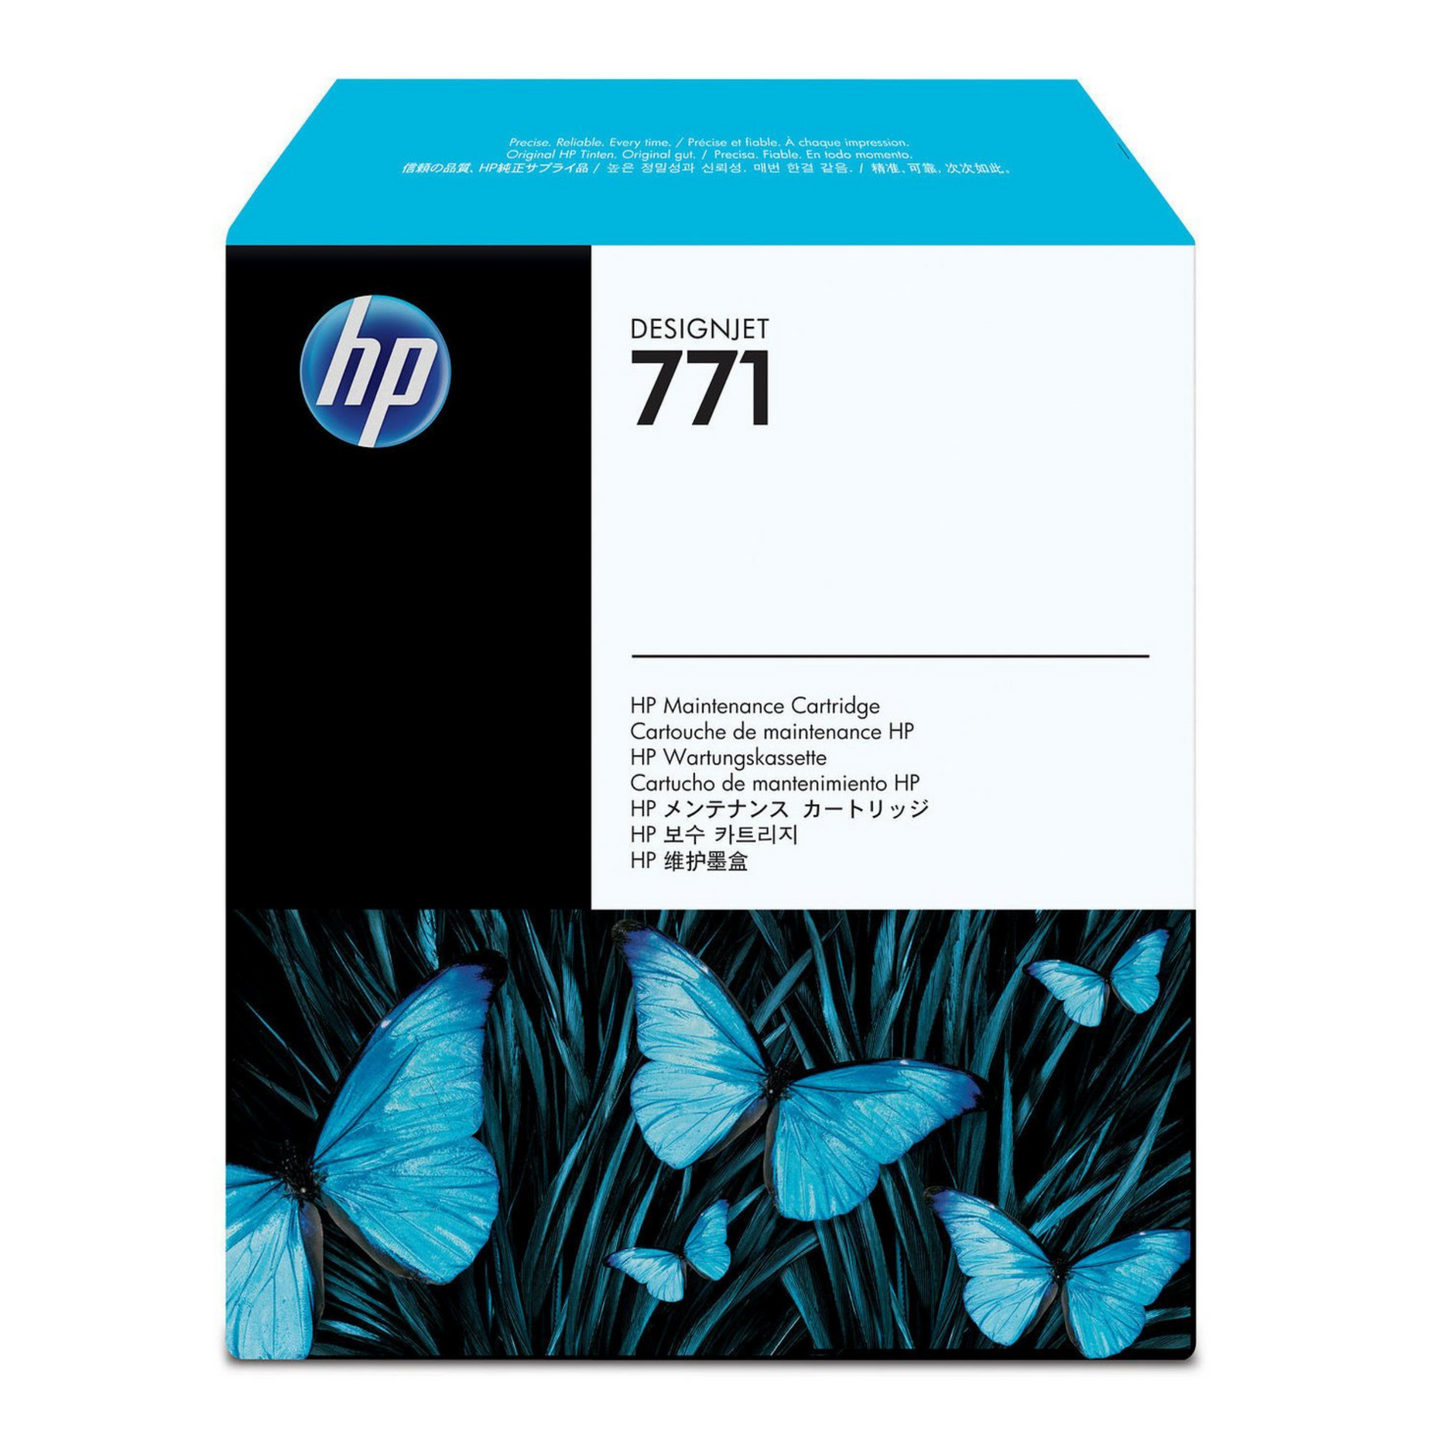 HP 771 CARTUCHO DE MANTENIMIENTO DESIGNJET CH644A